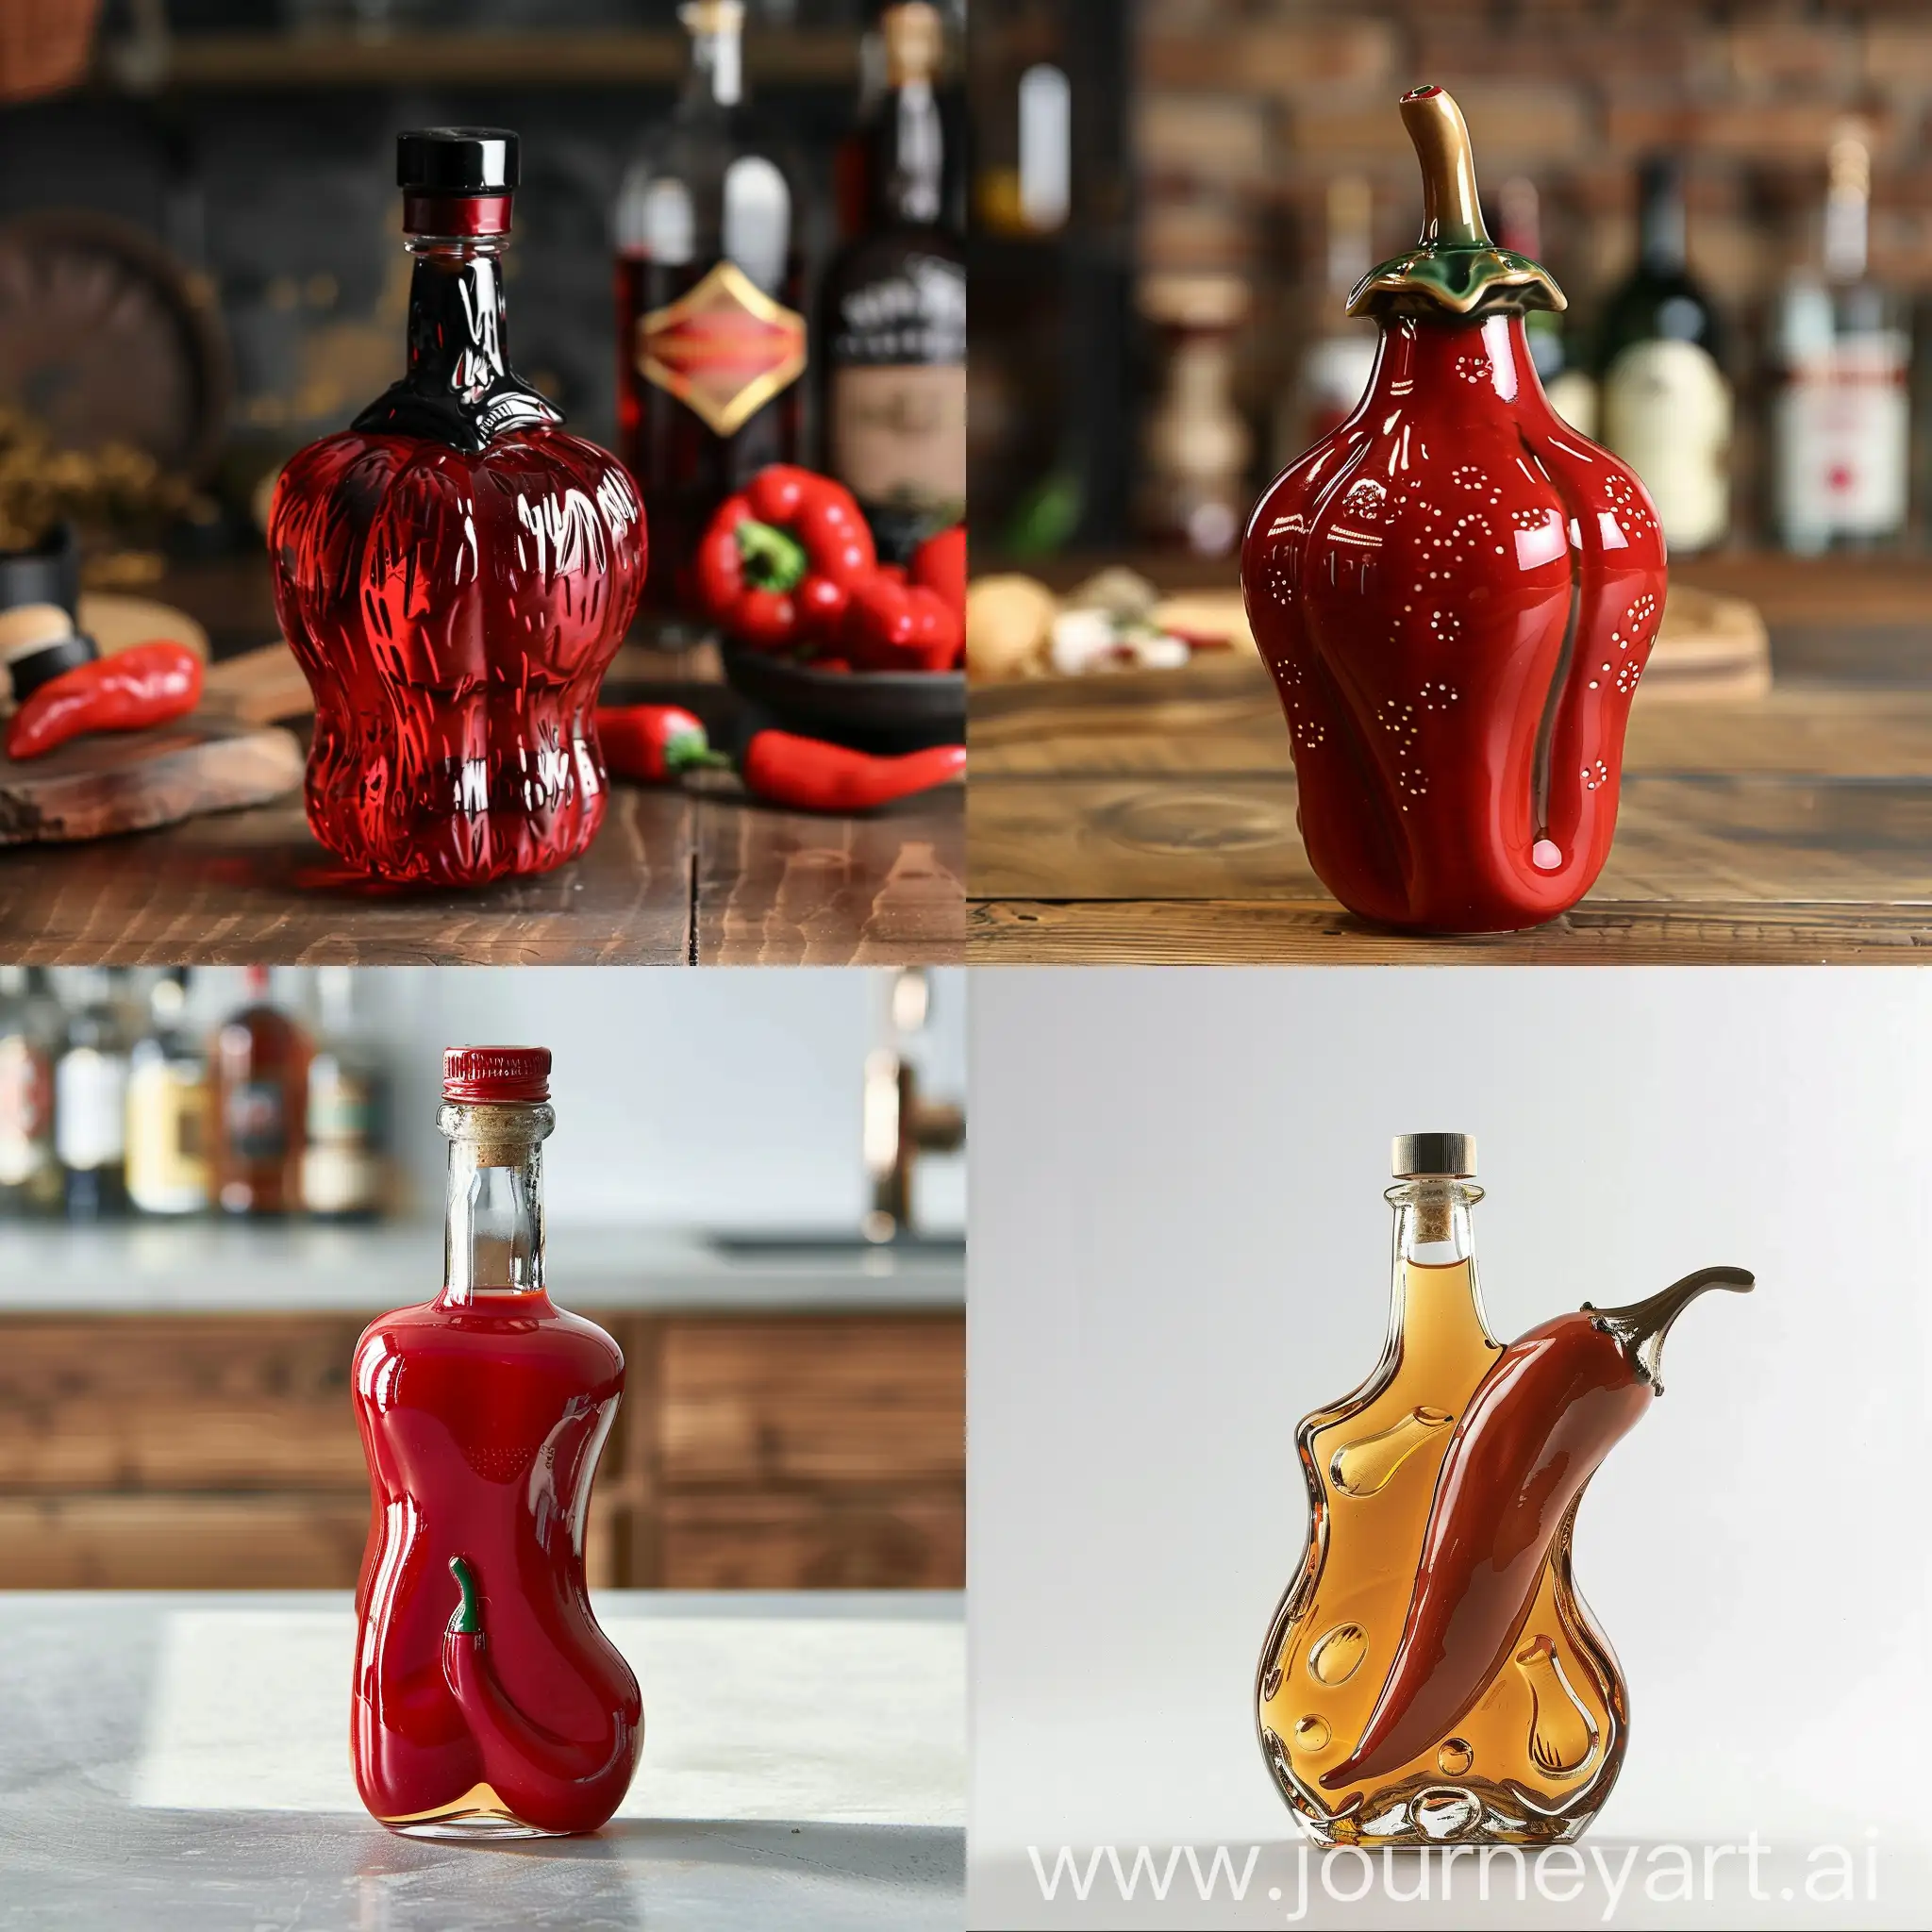 pepper shaped alcol bottle